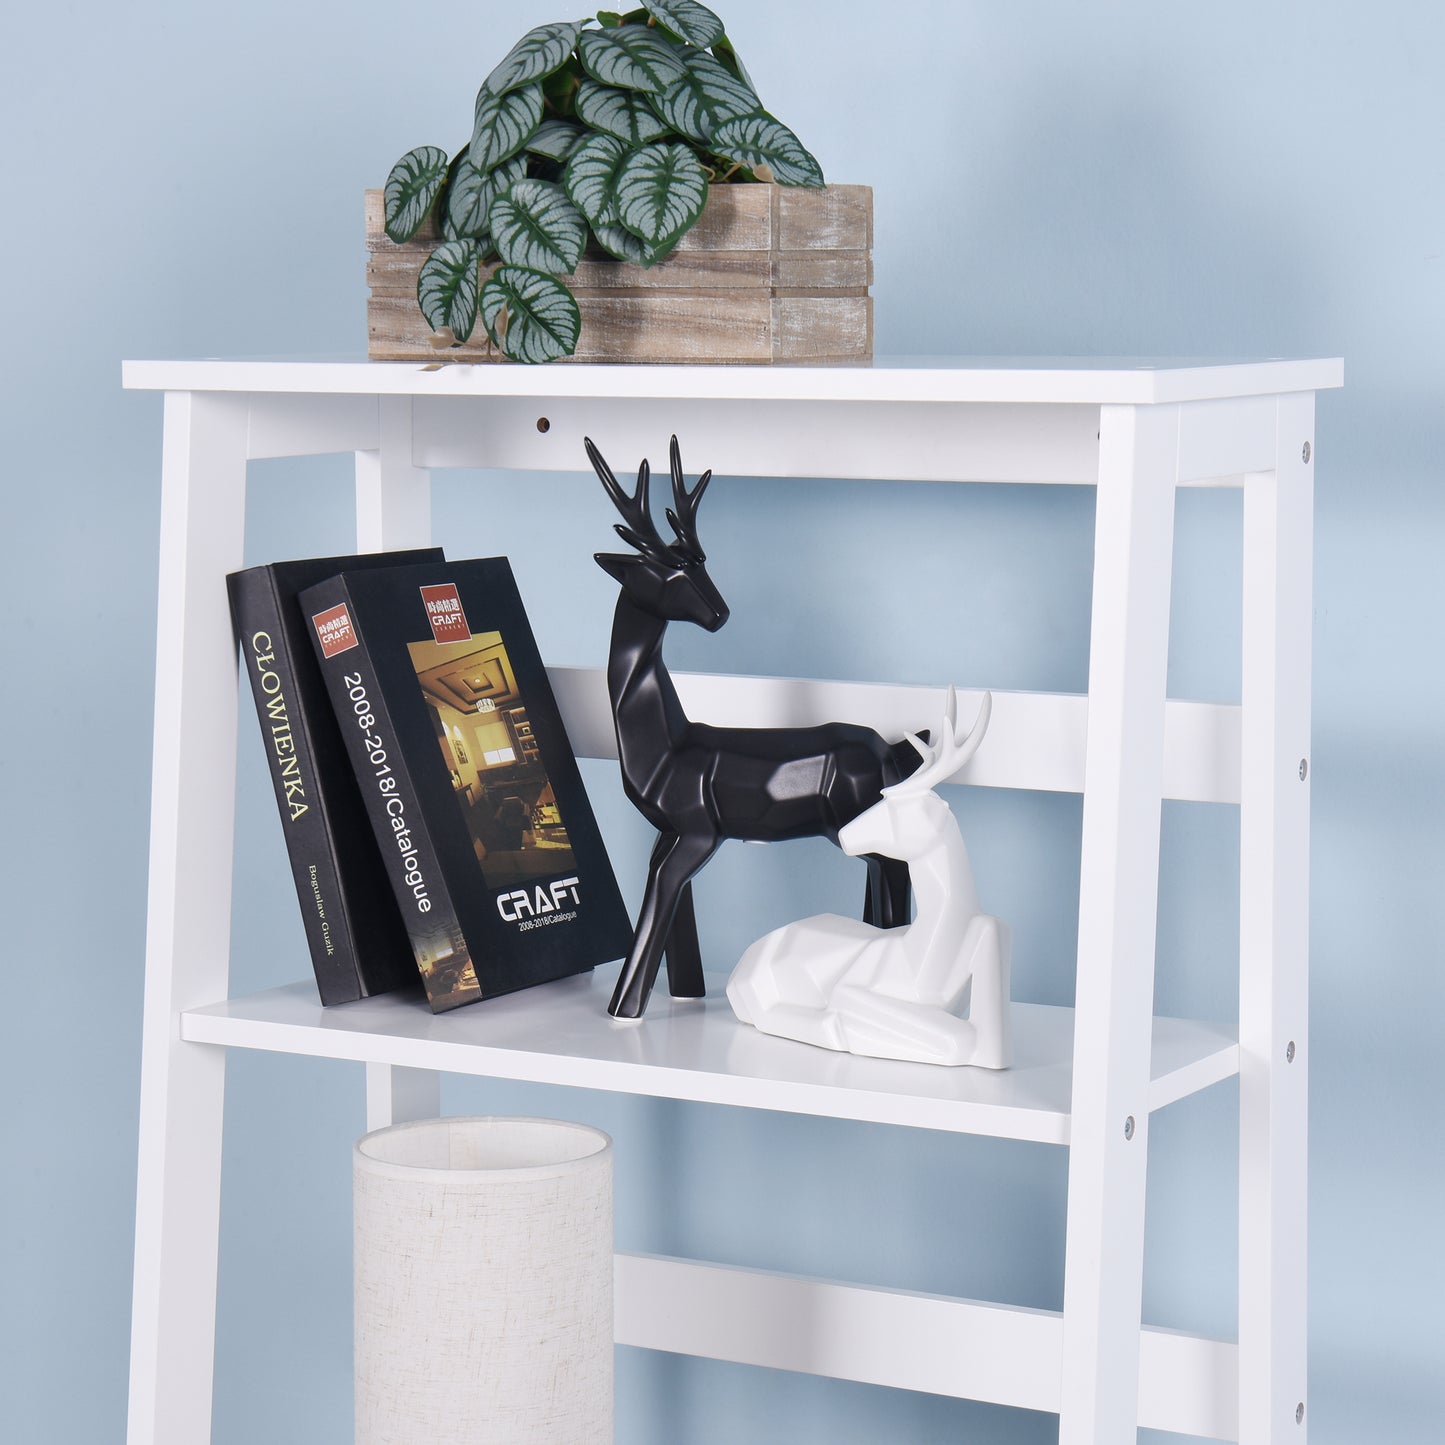 Basics Modern 5-Tier Ladder Wooden Bookcase